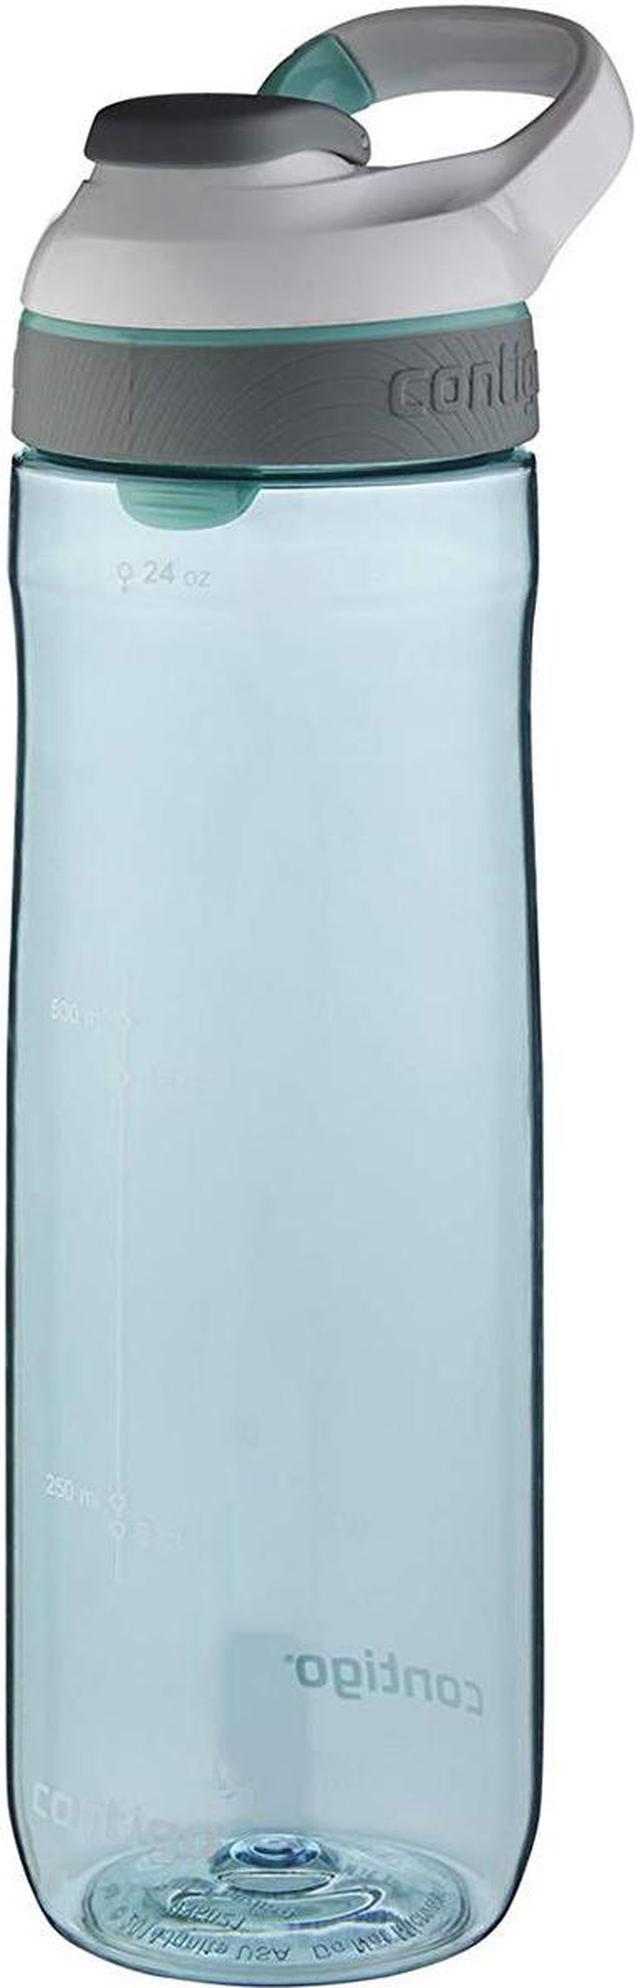 Contigo 24 oz. Cortland Autoseal Water Bottle - Grayed Jade/Bone Lid 